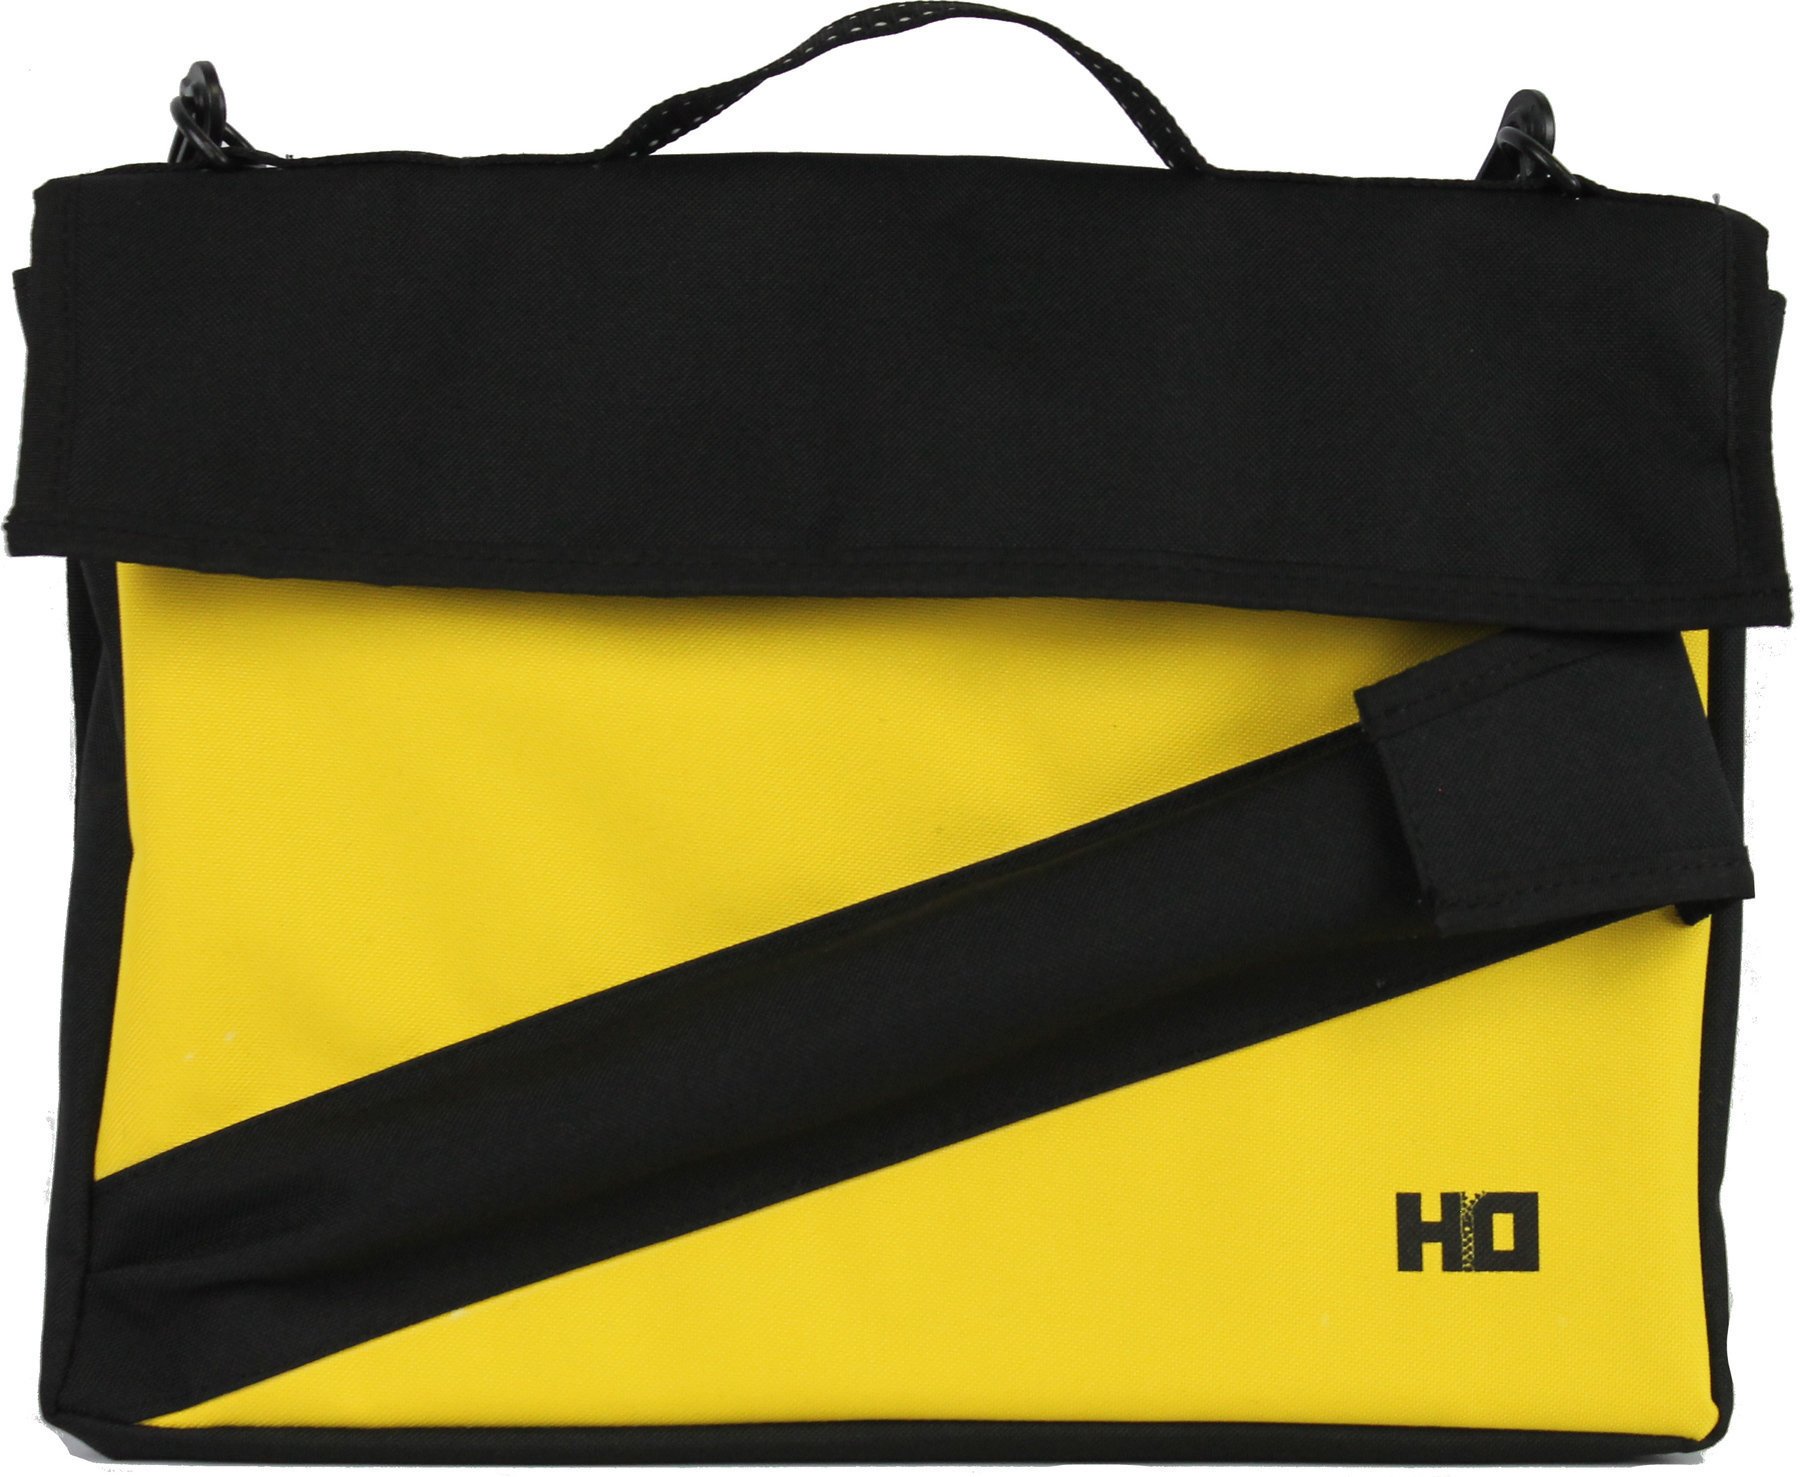 Music bag Hudební Obaly H-O Flautino Bag for Notes Yellow/Black